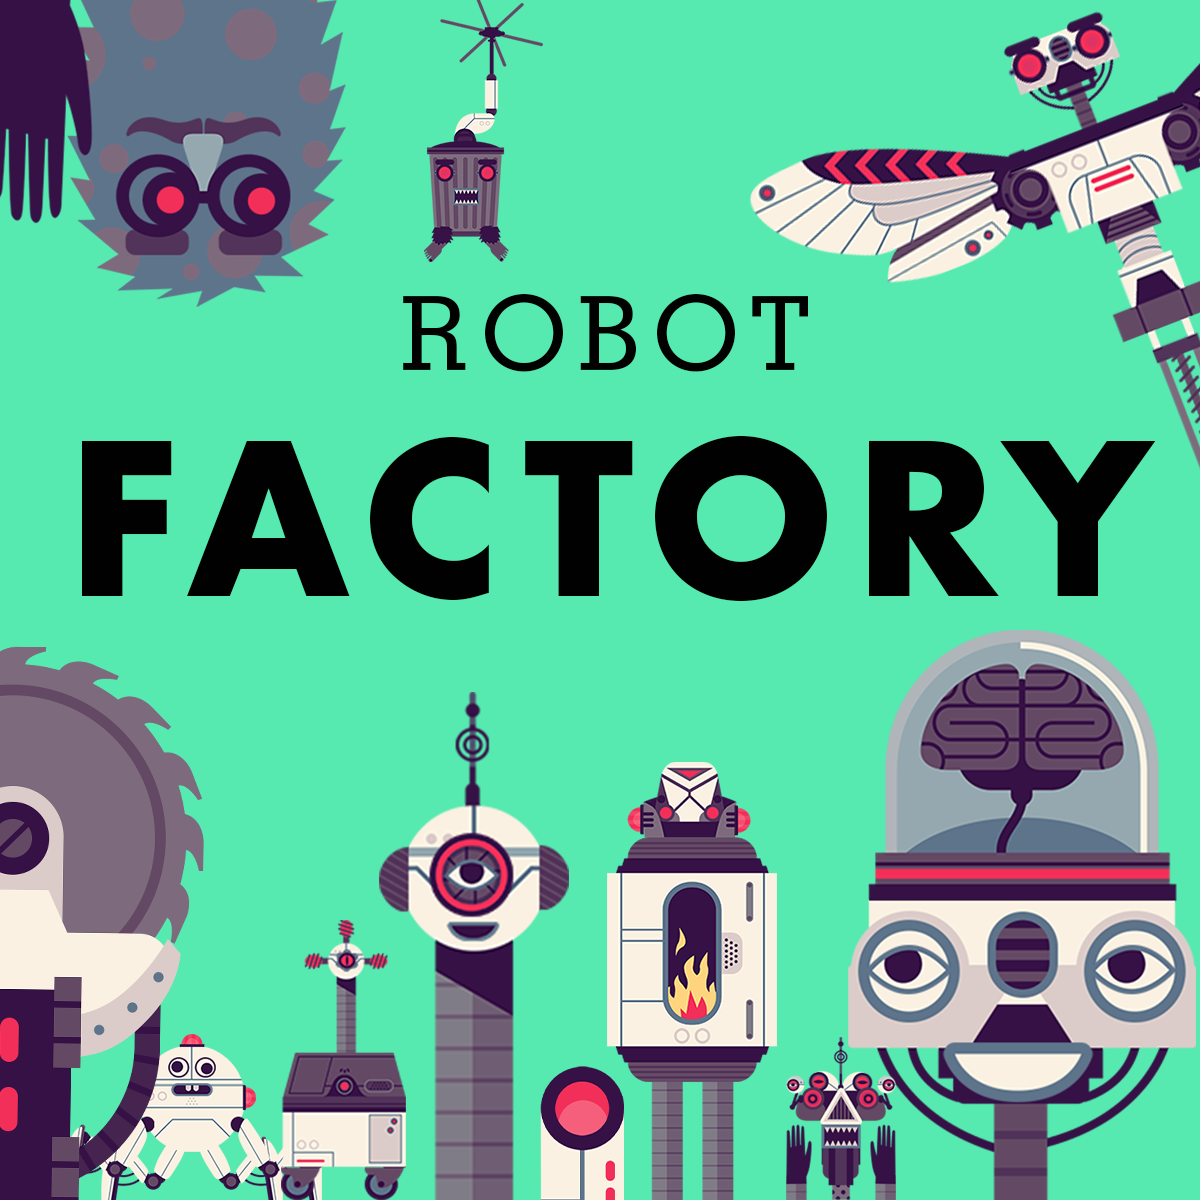 Image: Robot Factory. - Credit: Robot Factory.